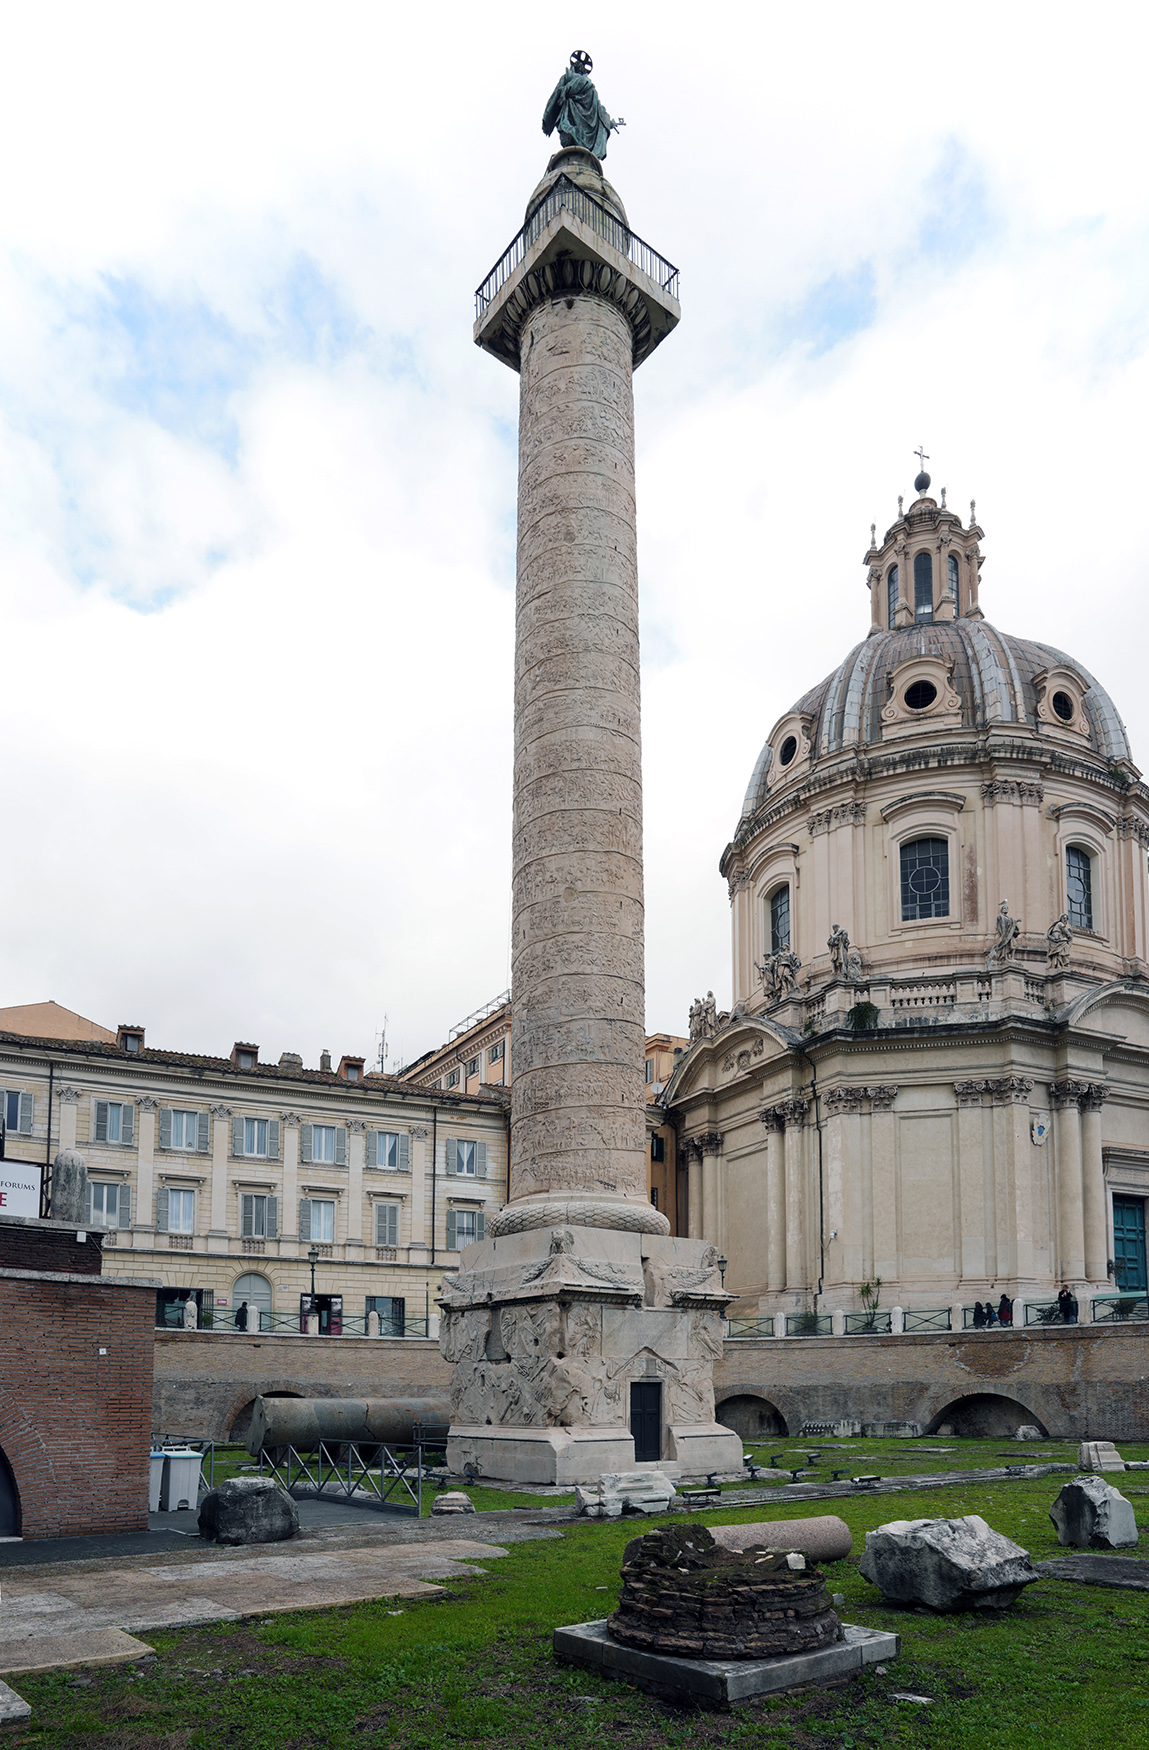 Column of Trajan